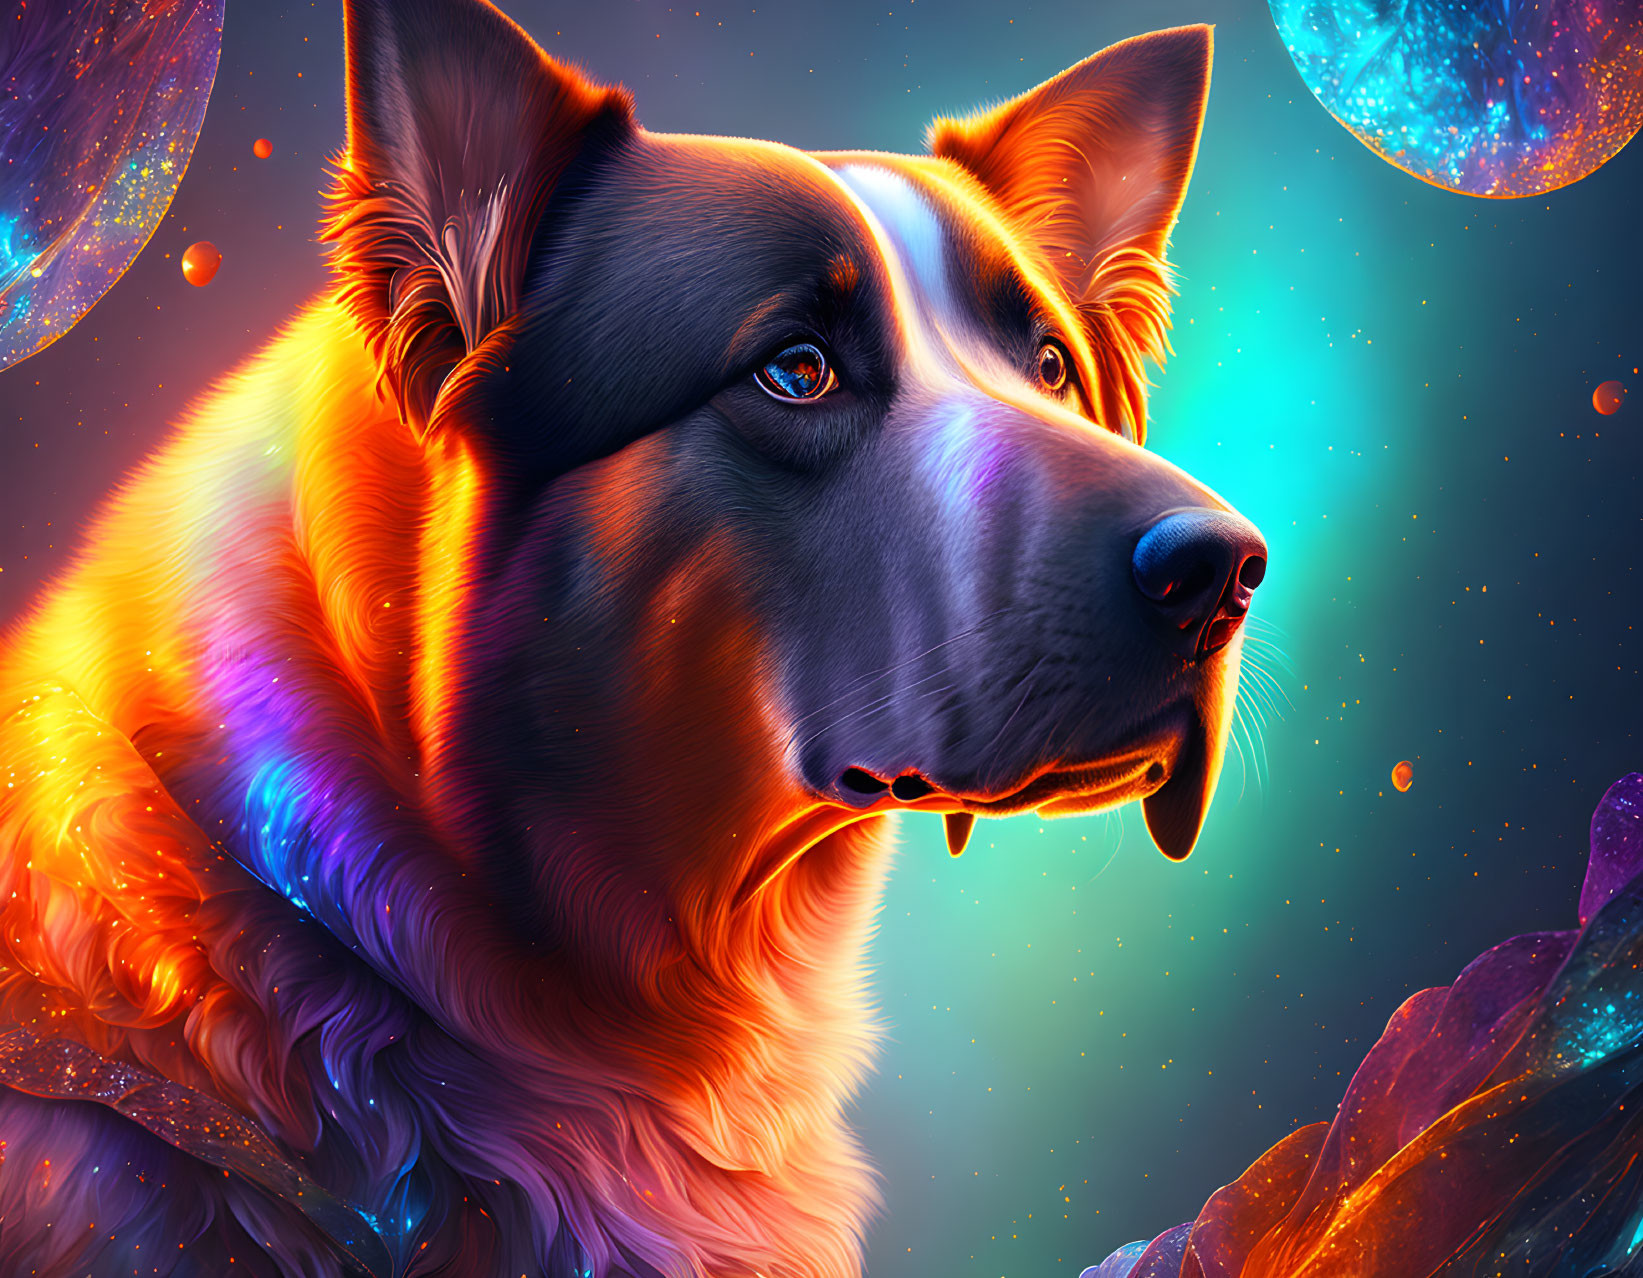 Colorful Digital Art Portrait of Dog in Cosmic Setting